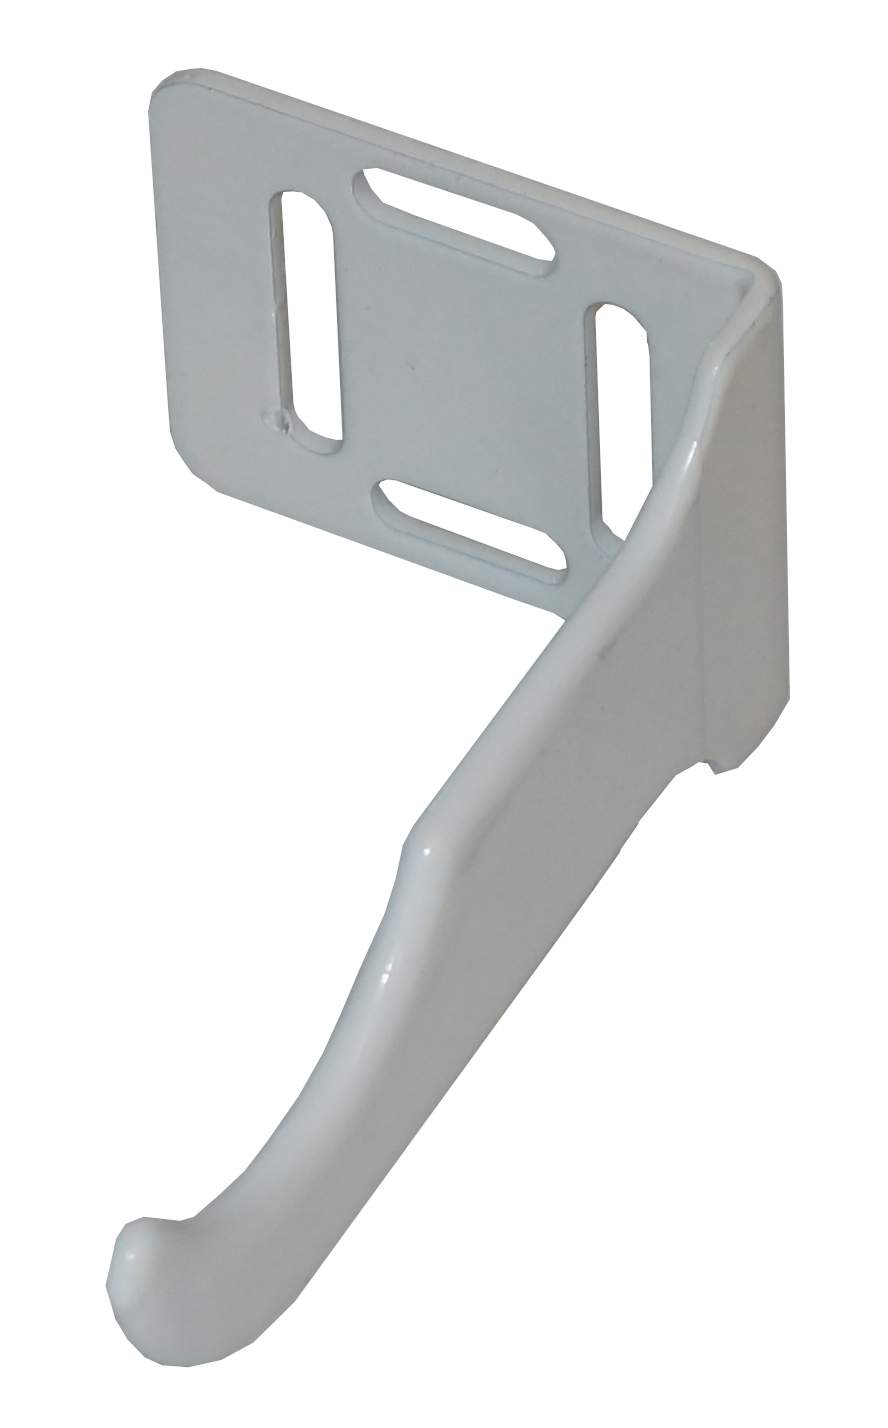 White screw-on bracket with plastic coating